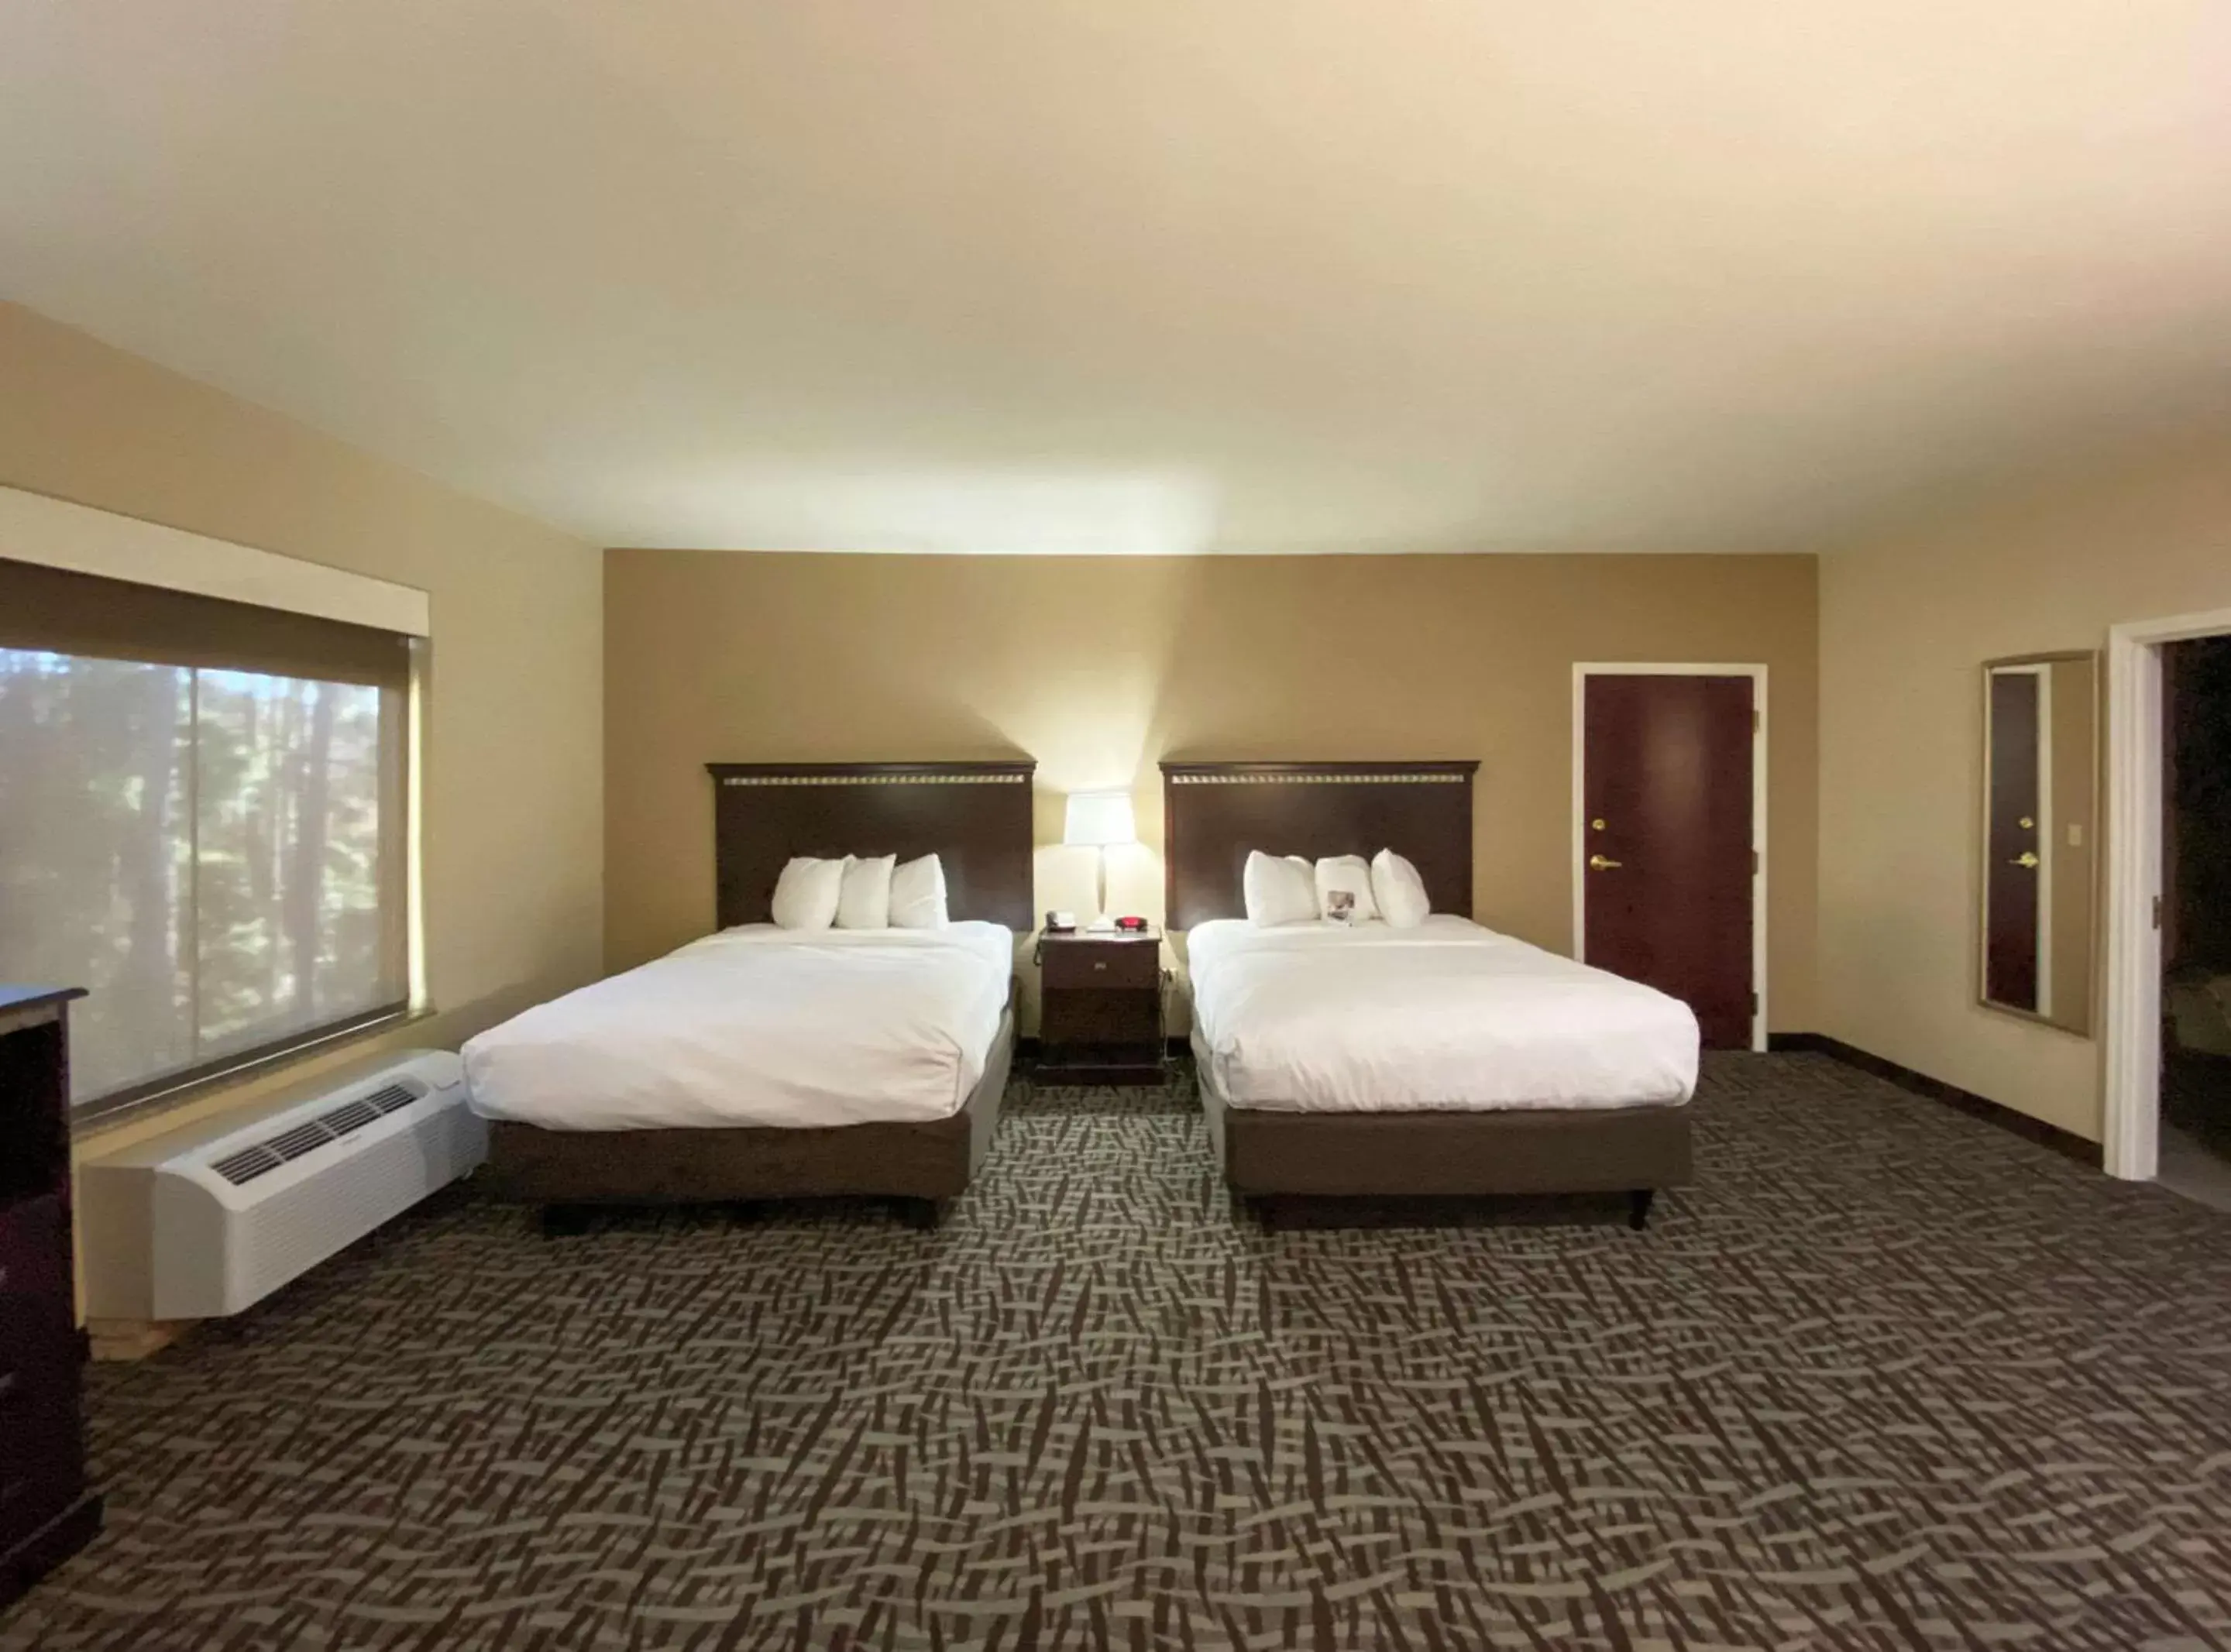 Bedroom, Bed in Comfort Suites by Choice Hotels, Kingsland, I-95, Kings Bay Naval Base